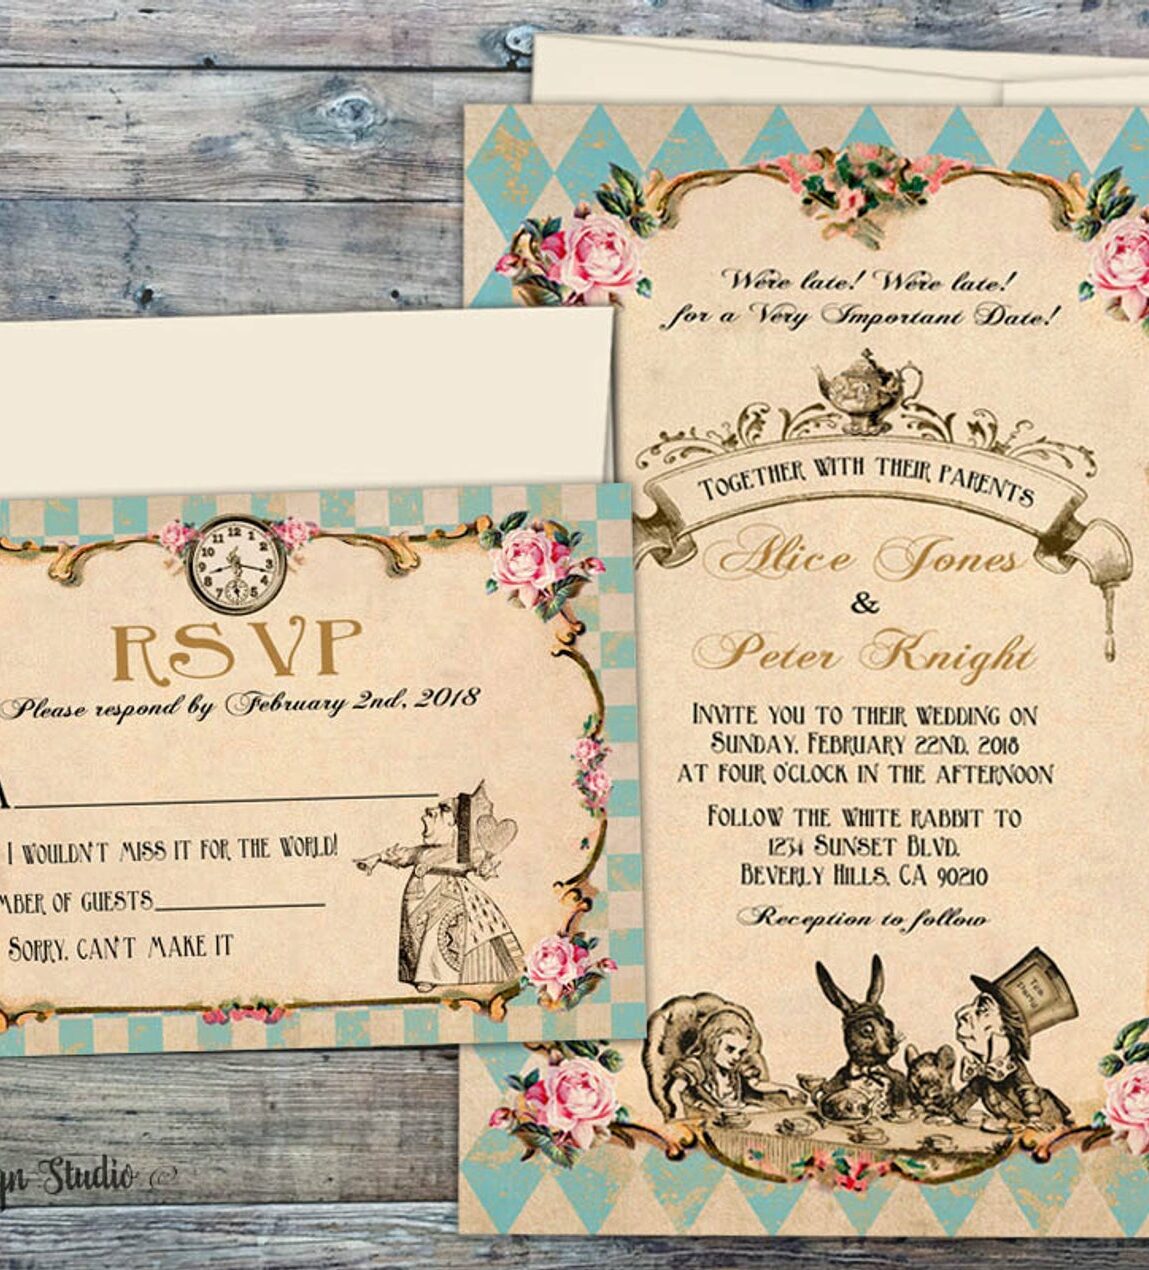 Etsy cupid designs wedding invitations